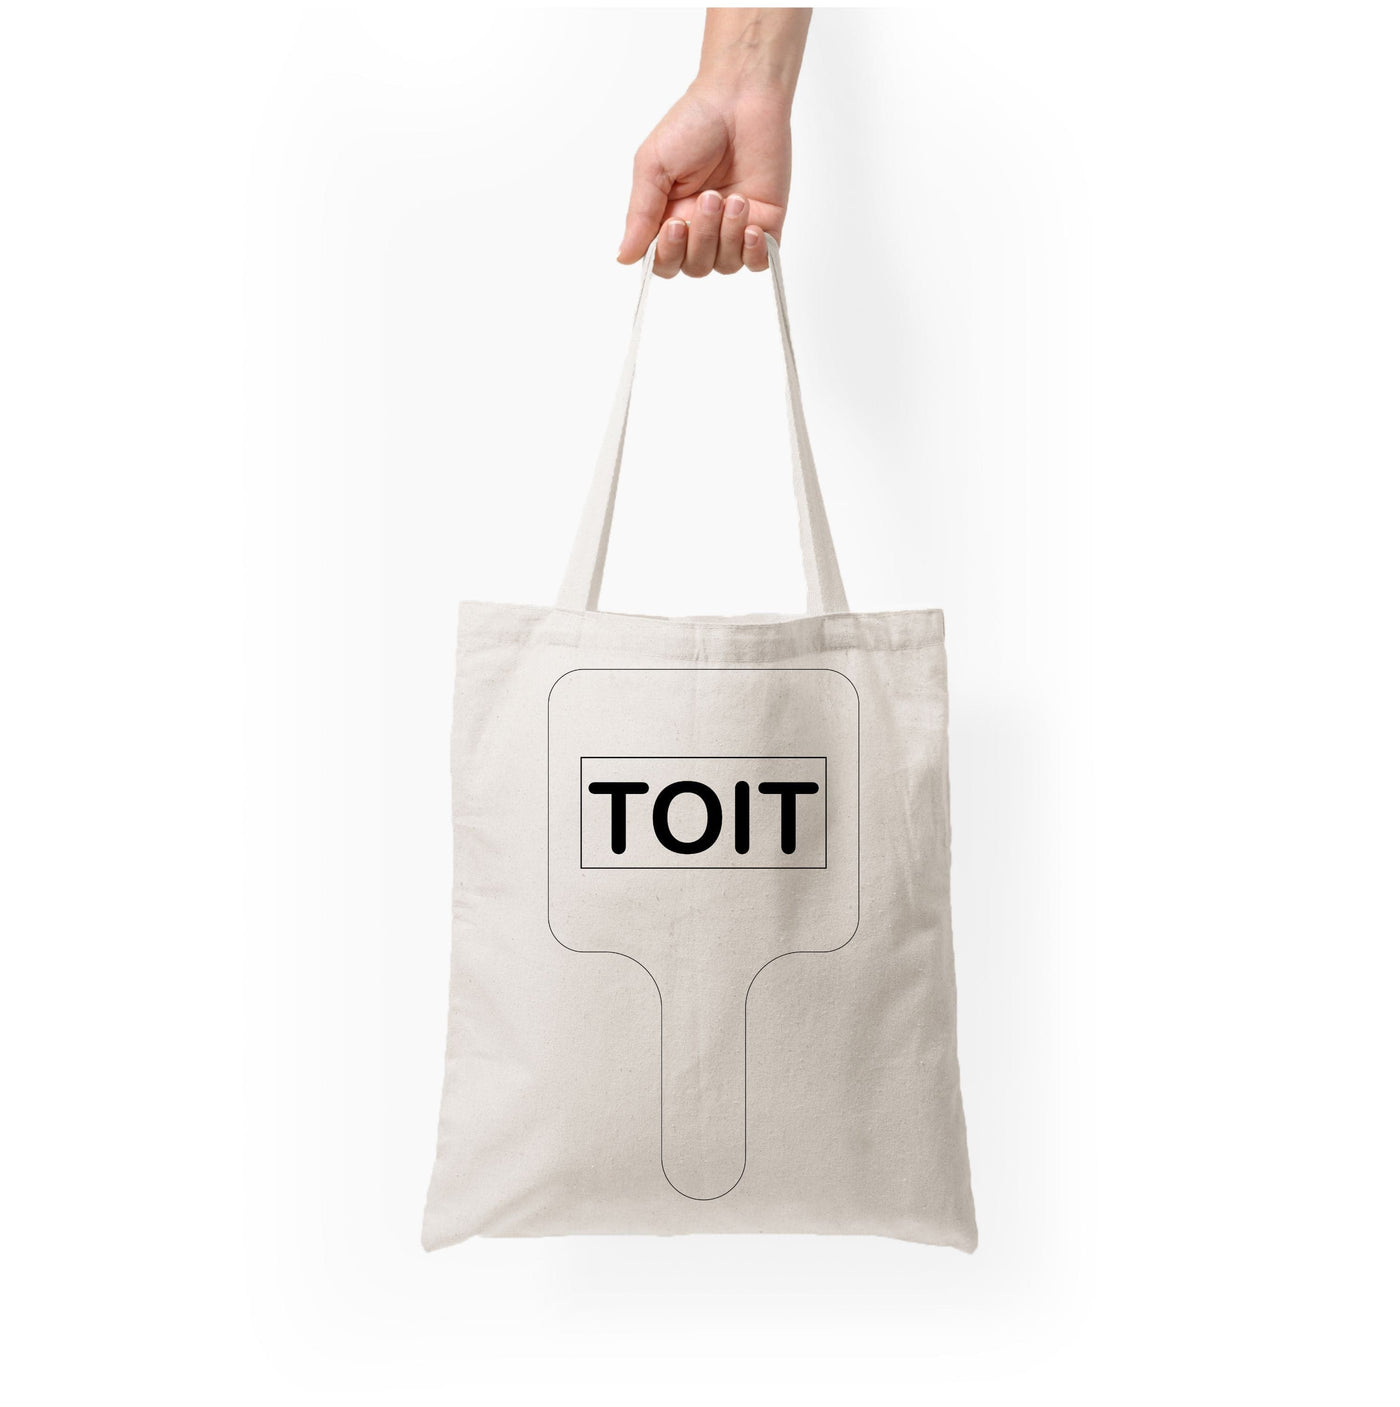 Toit - Brooklyn Nine-Nine Tote Bag